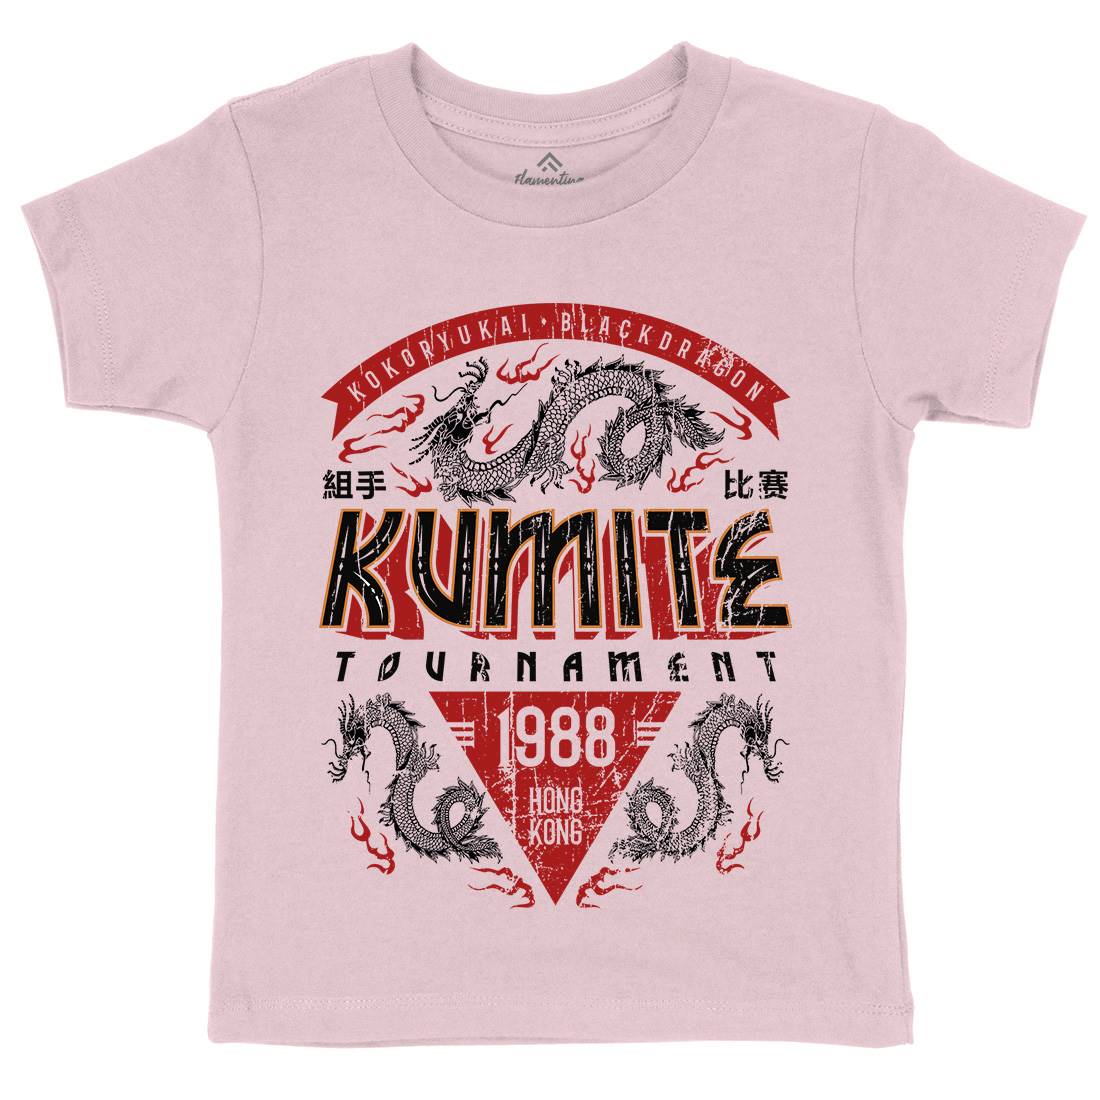 Kumite Tournament Kids Organic Crew Neck T-Shirt Sport D245